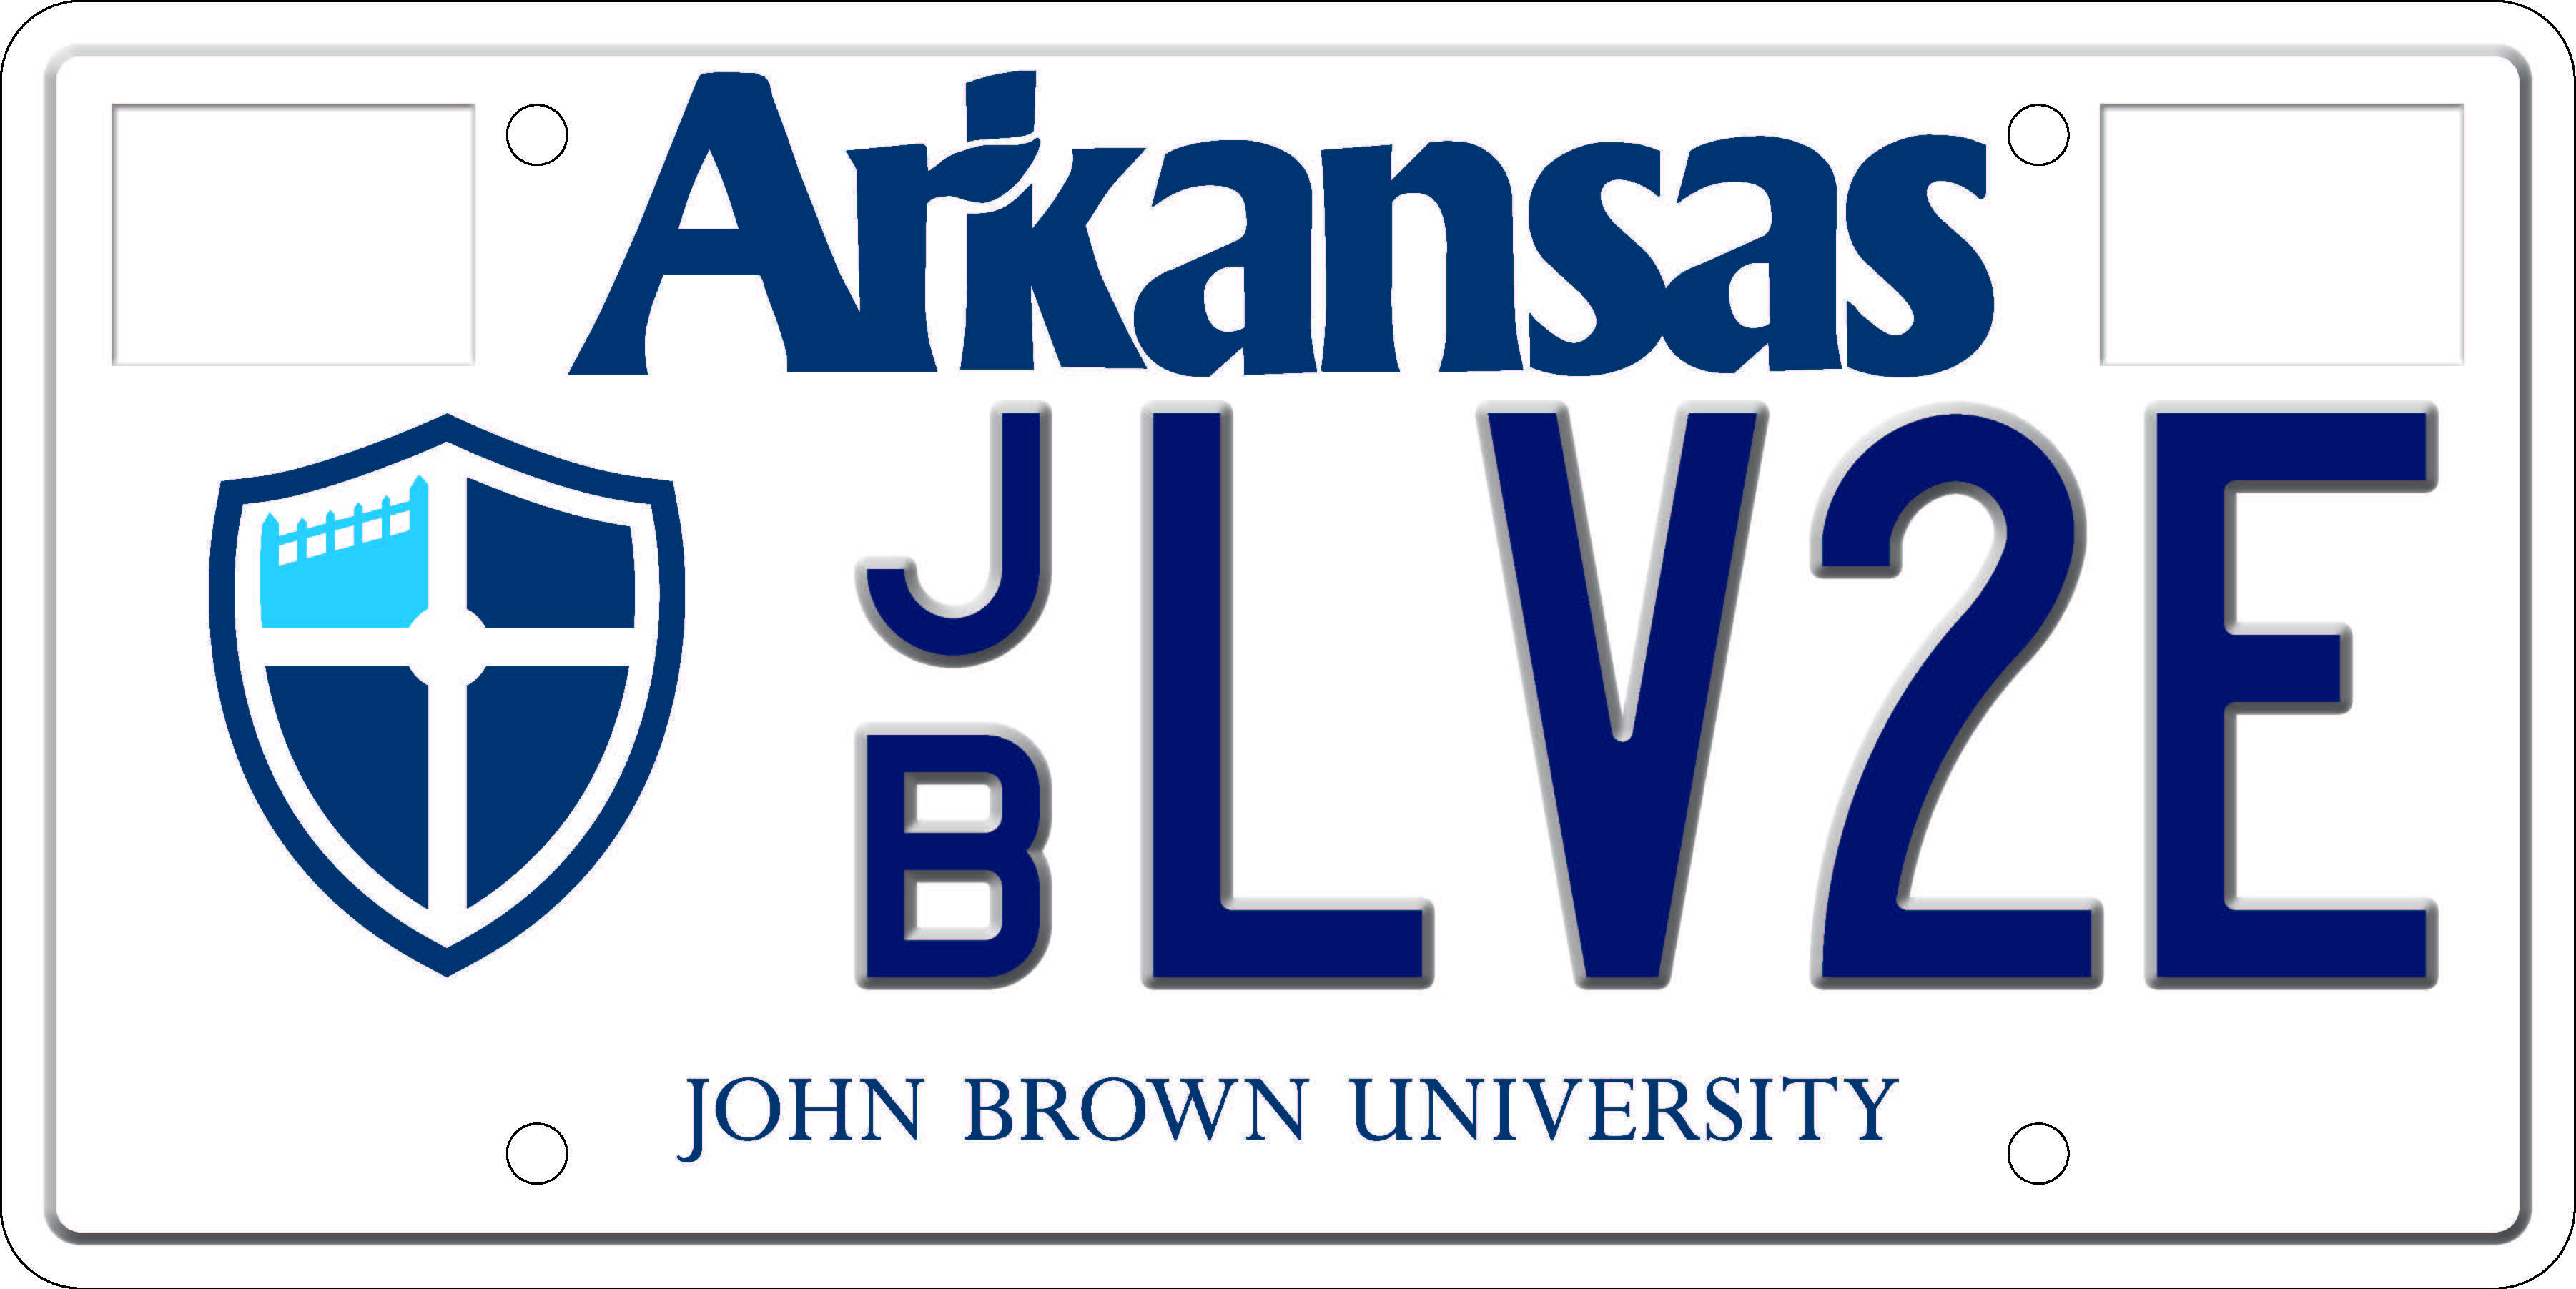 John Brown University License plate